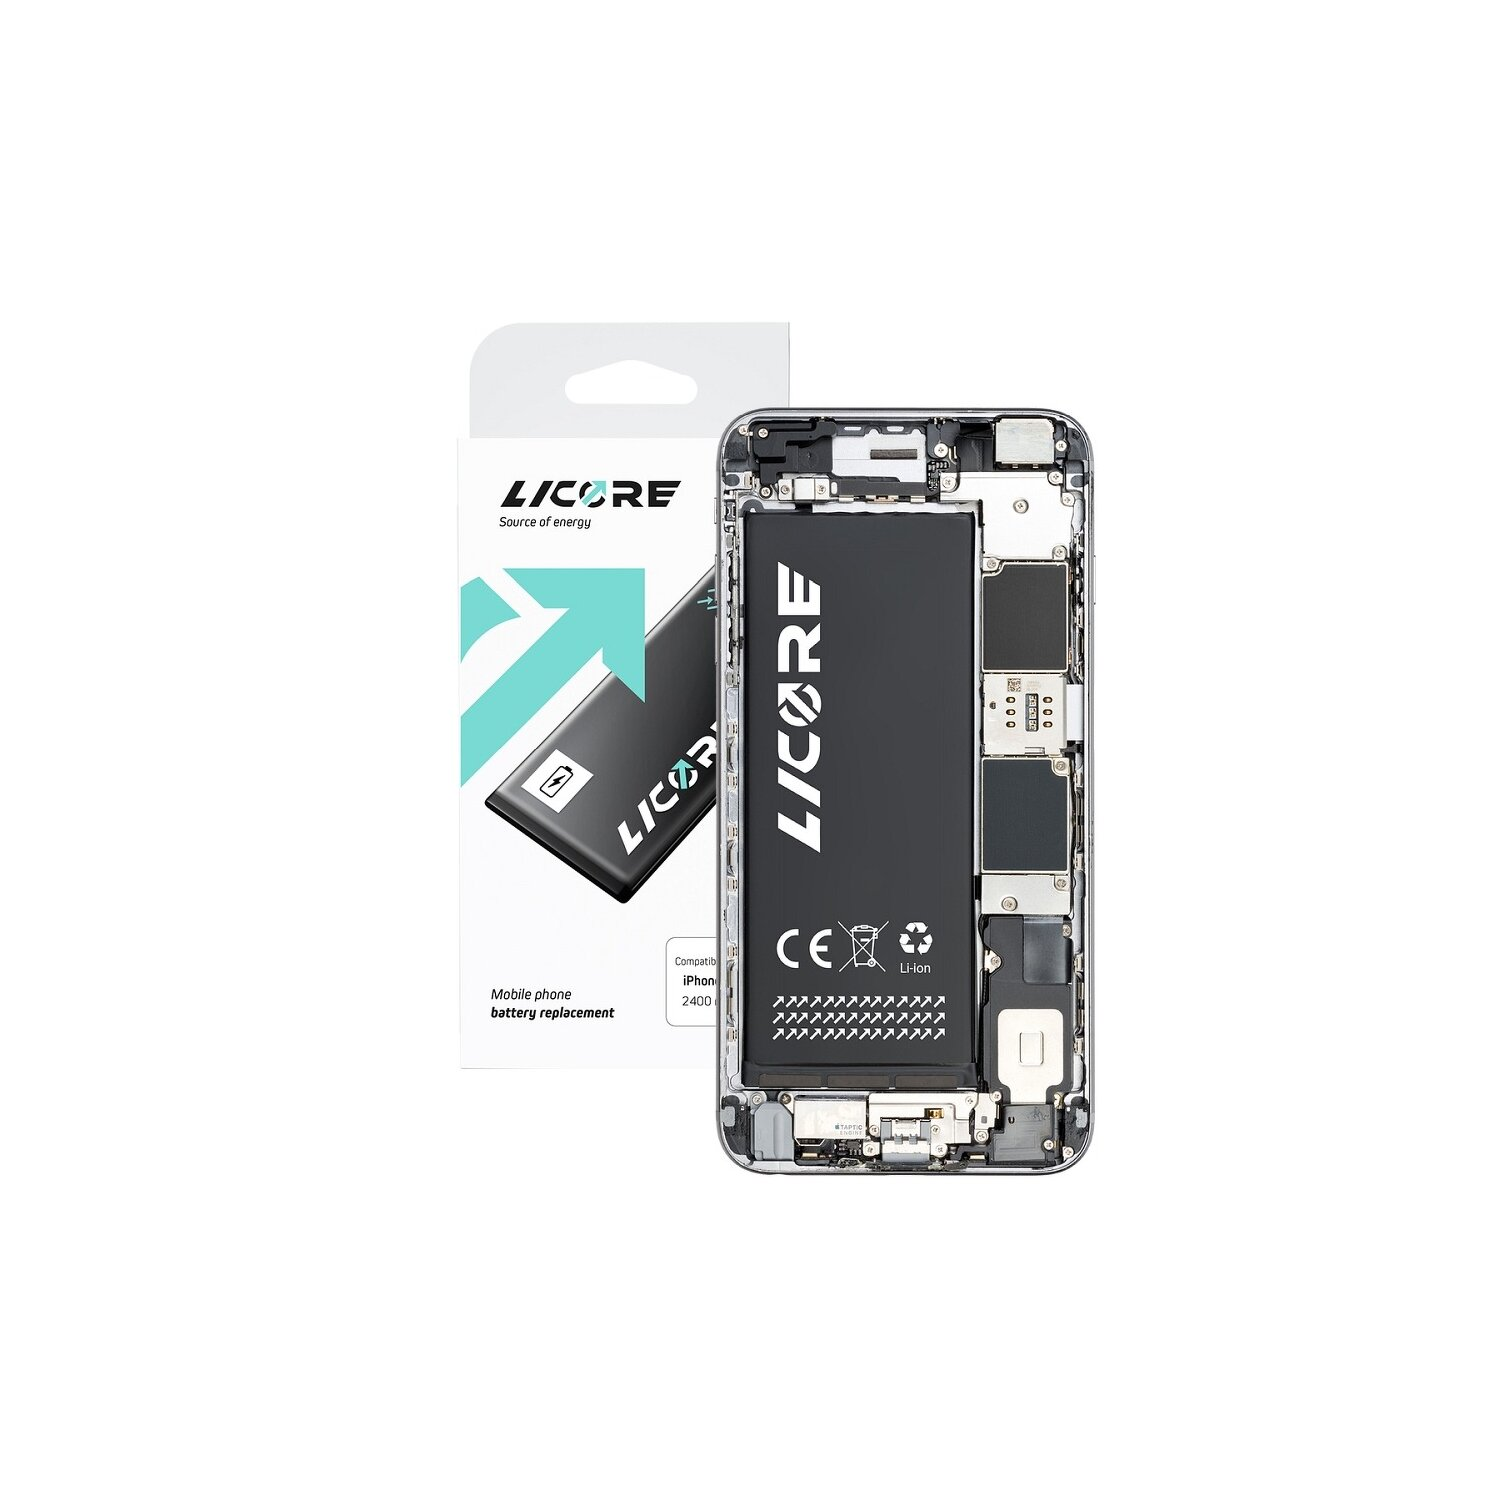 COFI Licore Akku 2900mAh Plus kompatibel Akku mit iPhone Ersatz 7 li-Ion